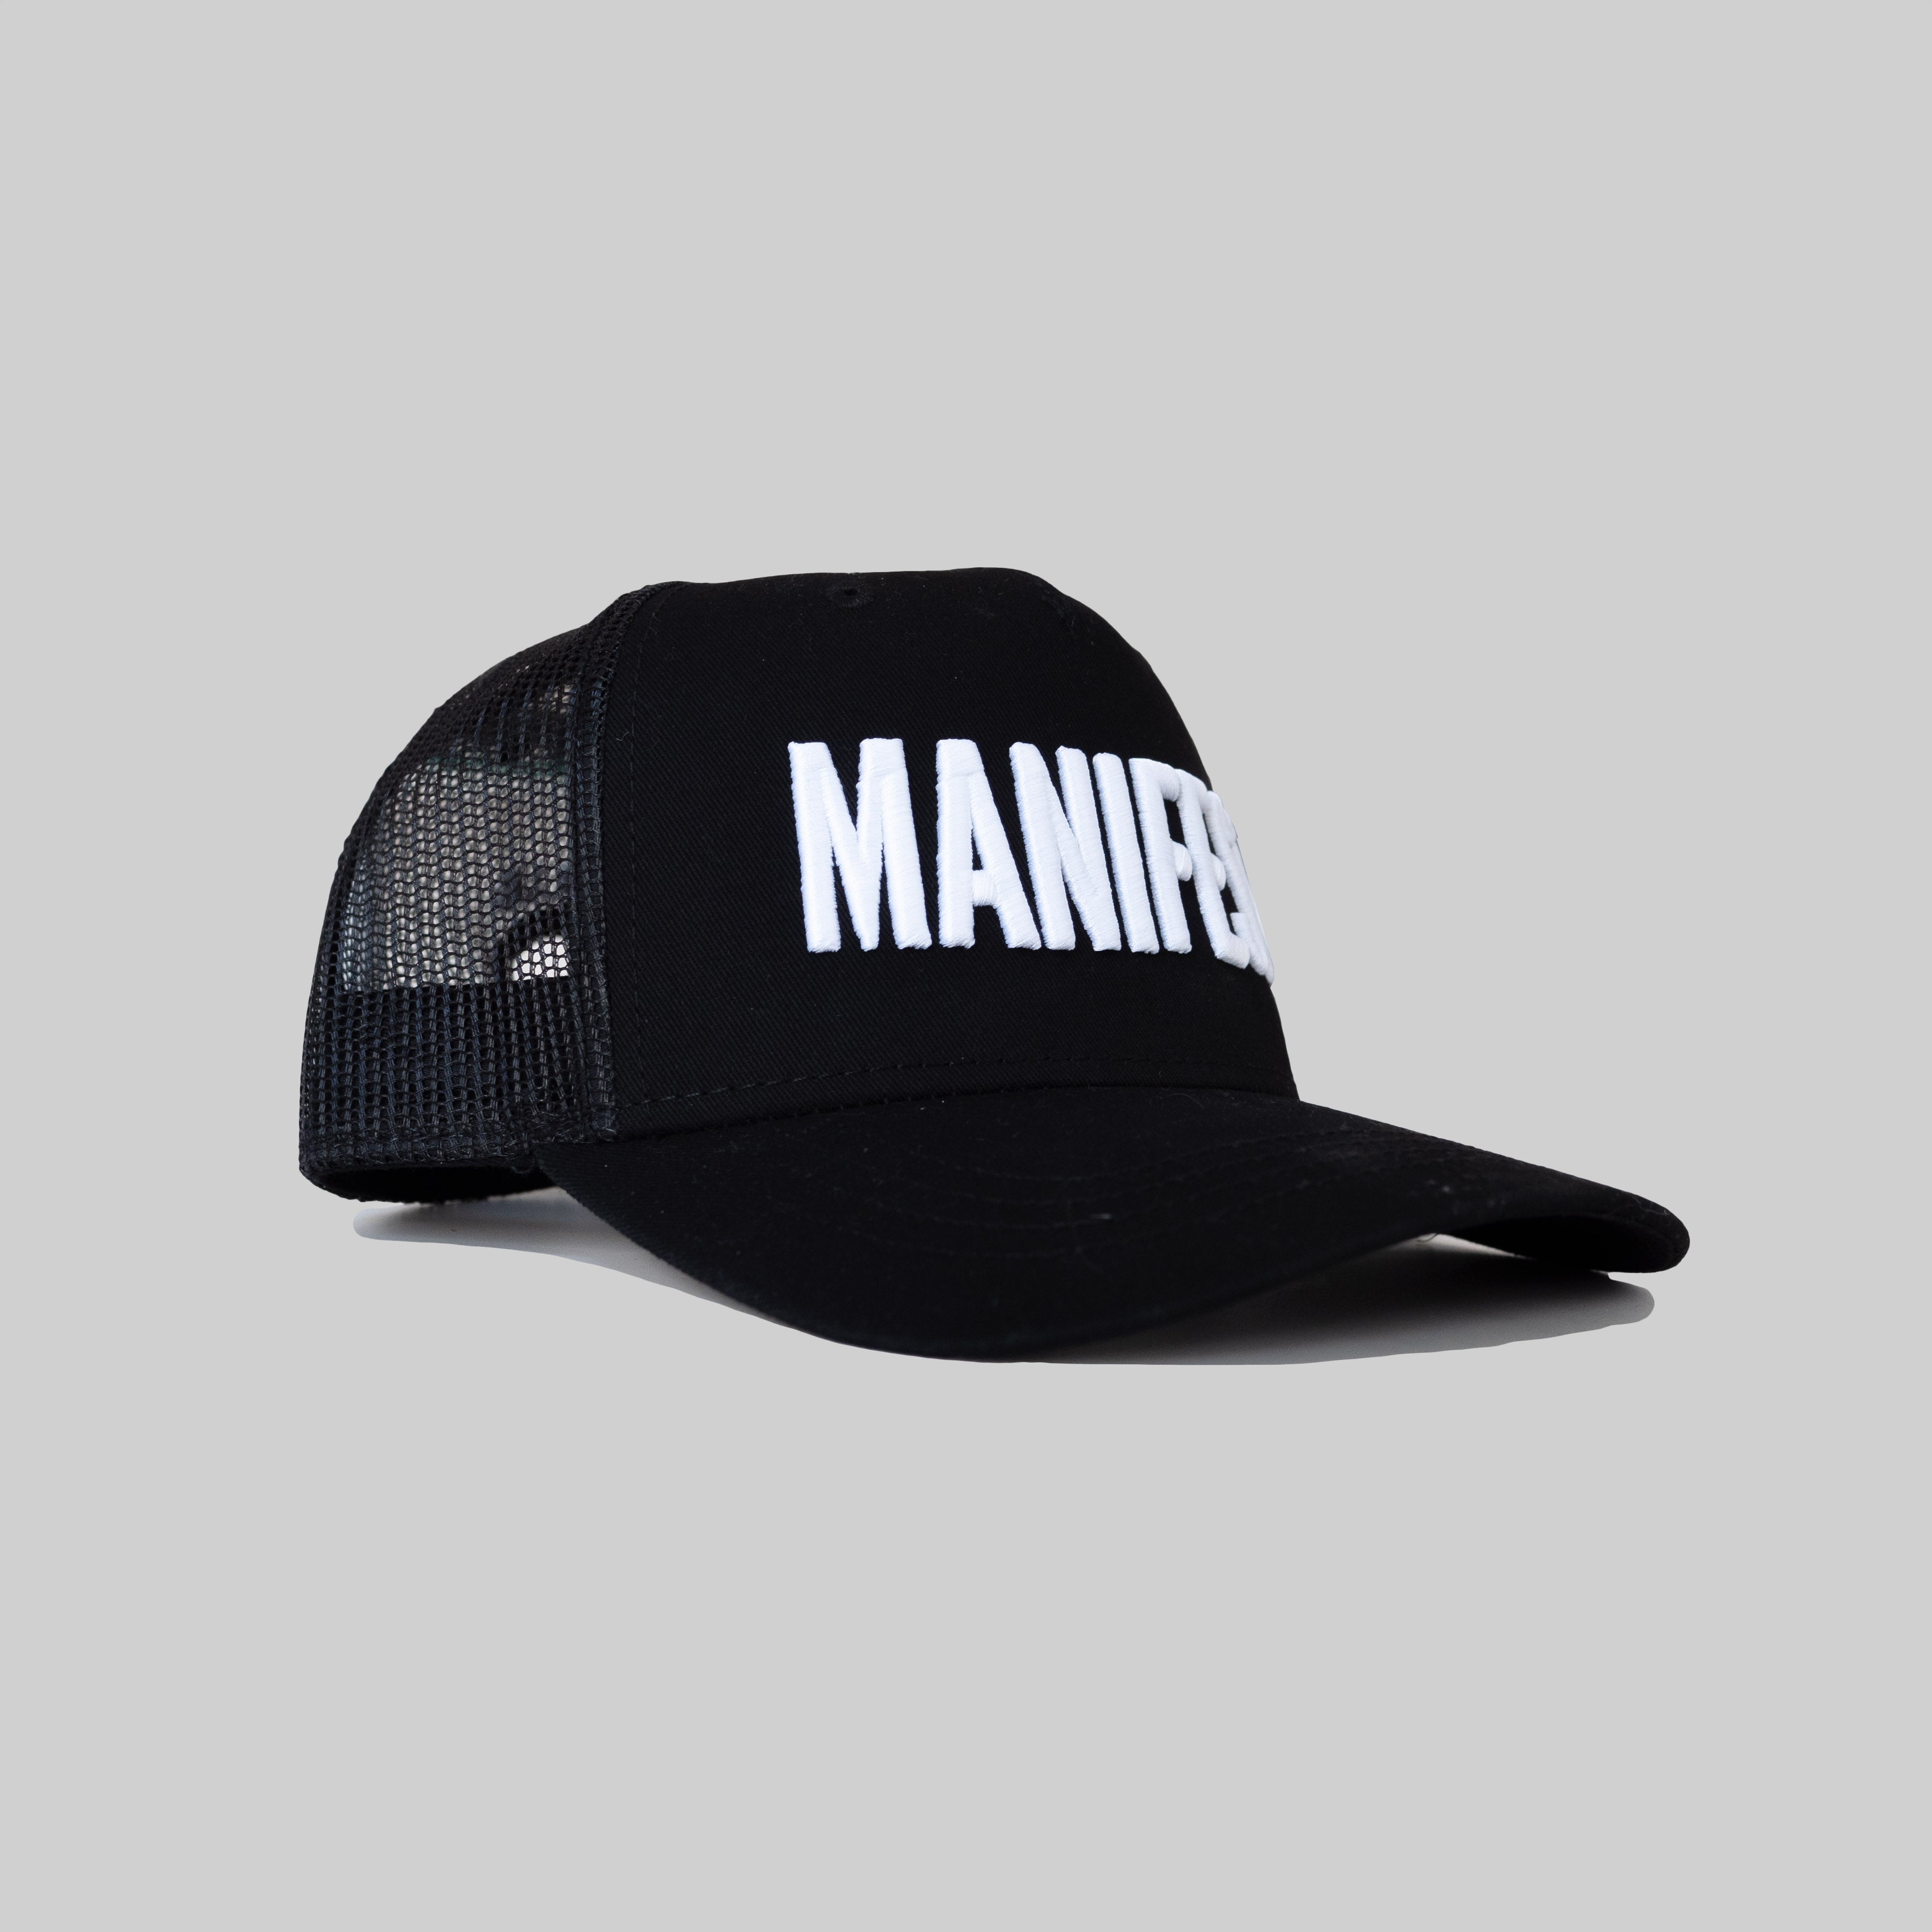 'MANIFEST' Snapback Cap - Black